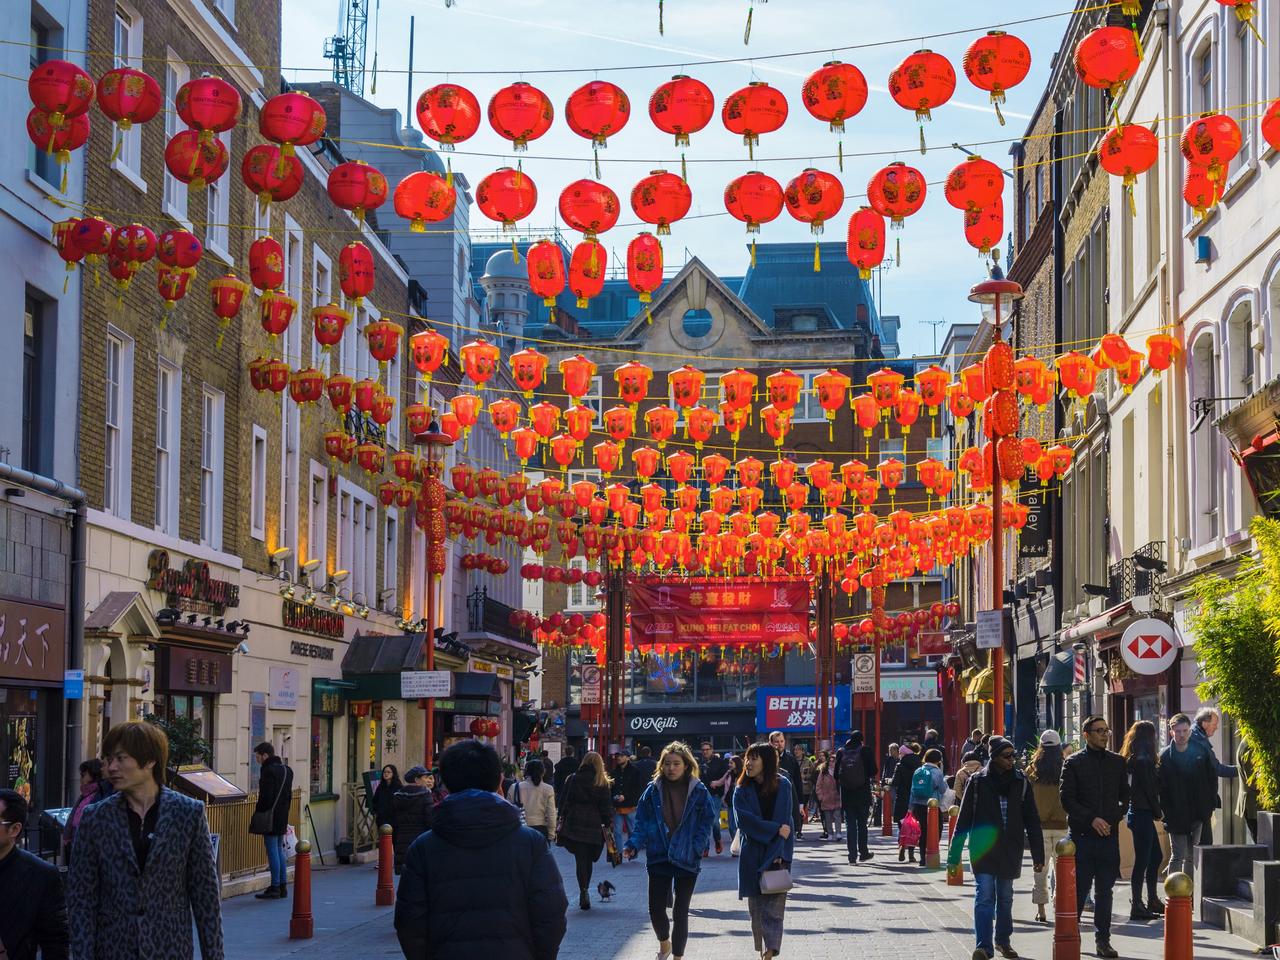 Chinatown Gerrard Street in London